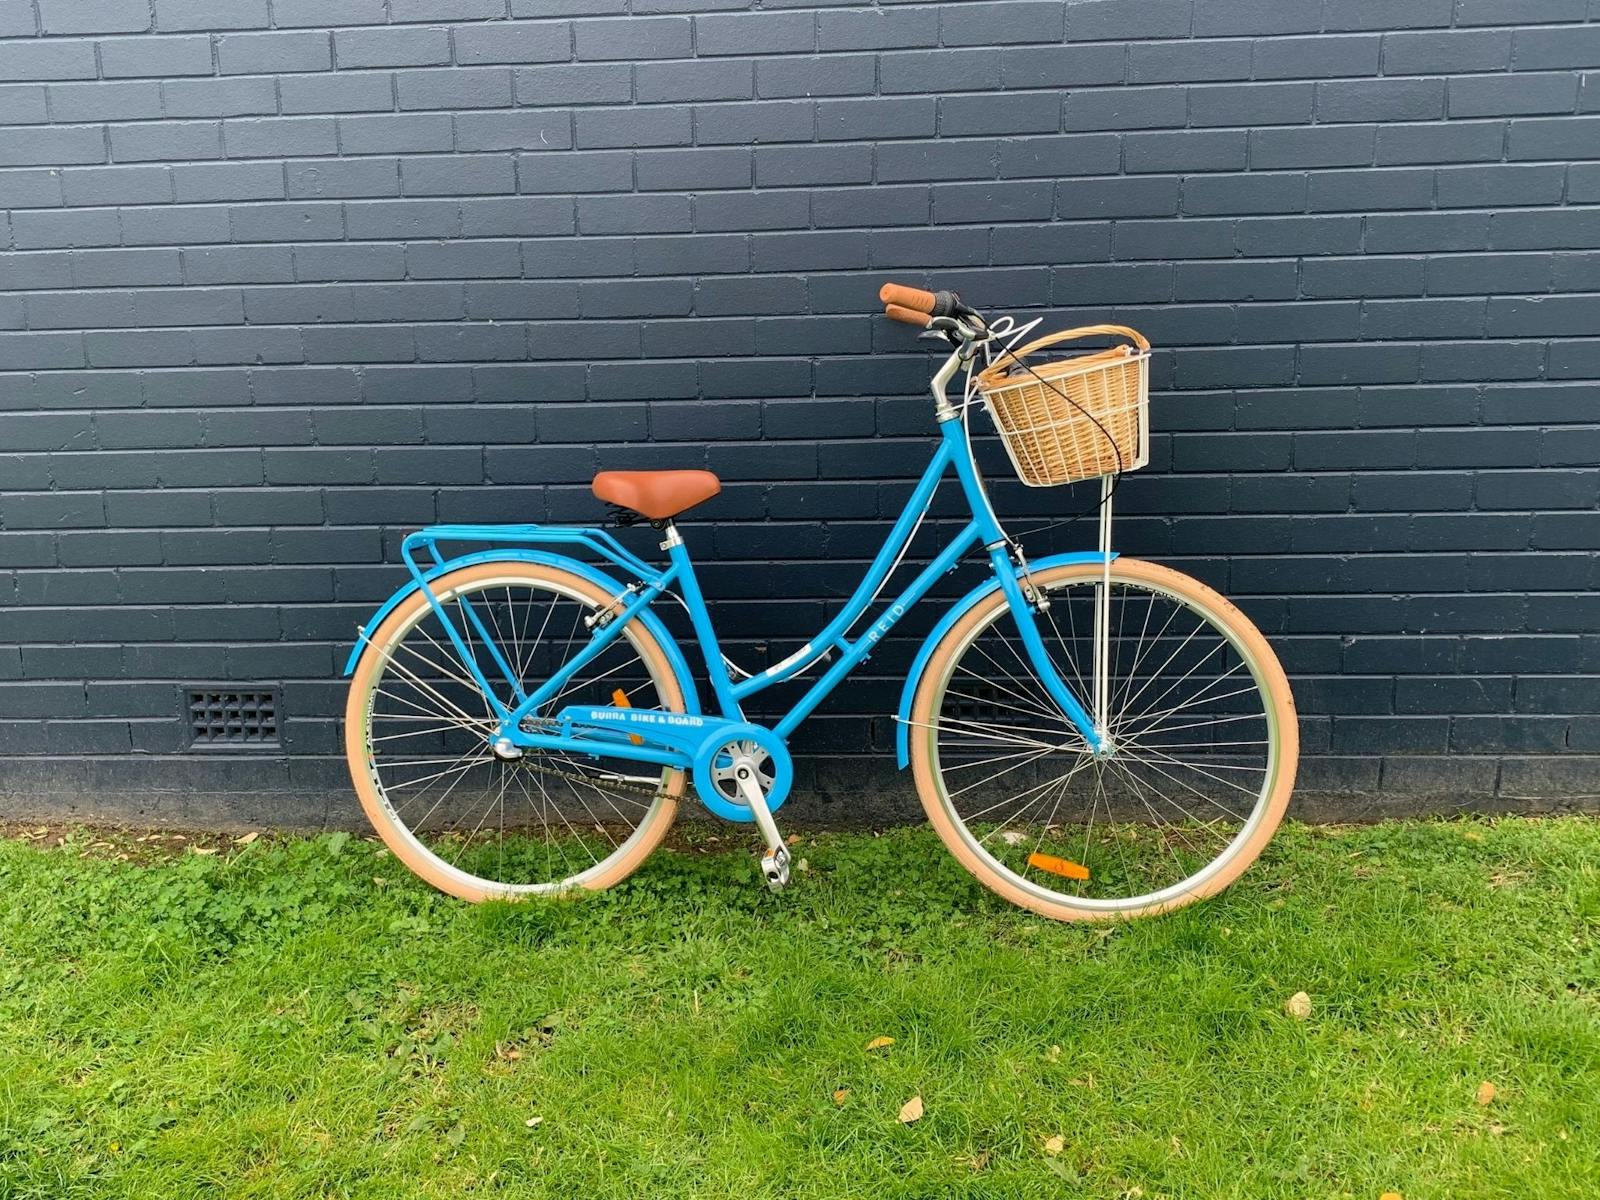 Vintage cruiser bike for hire. Instagram-ready!